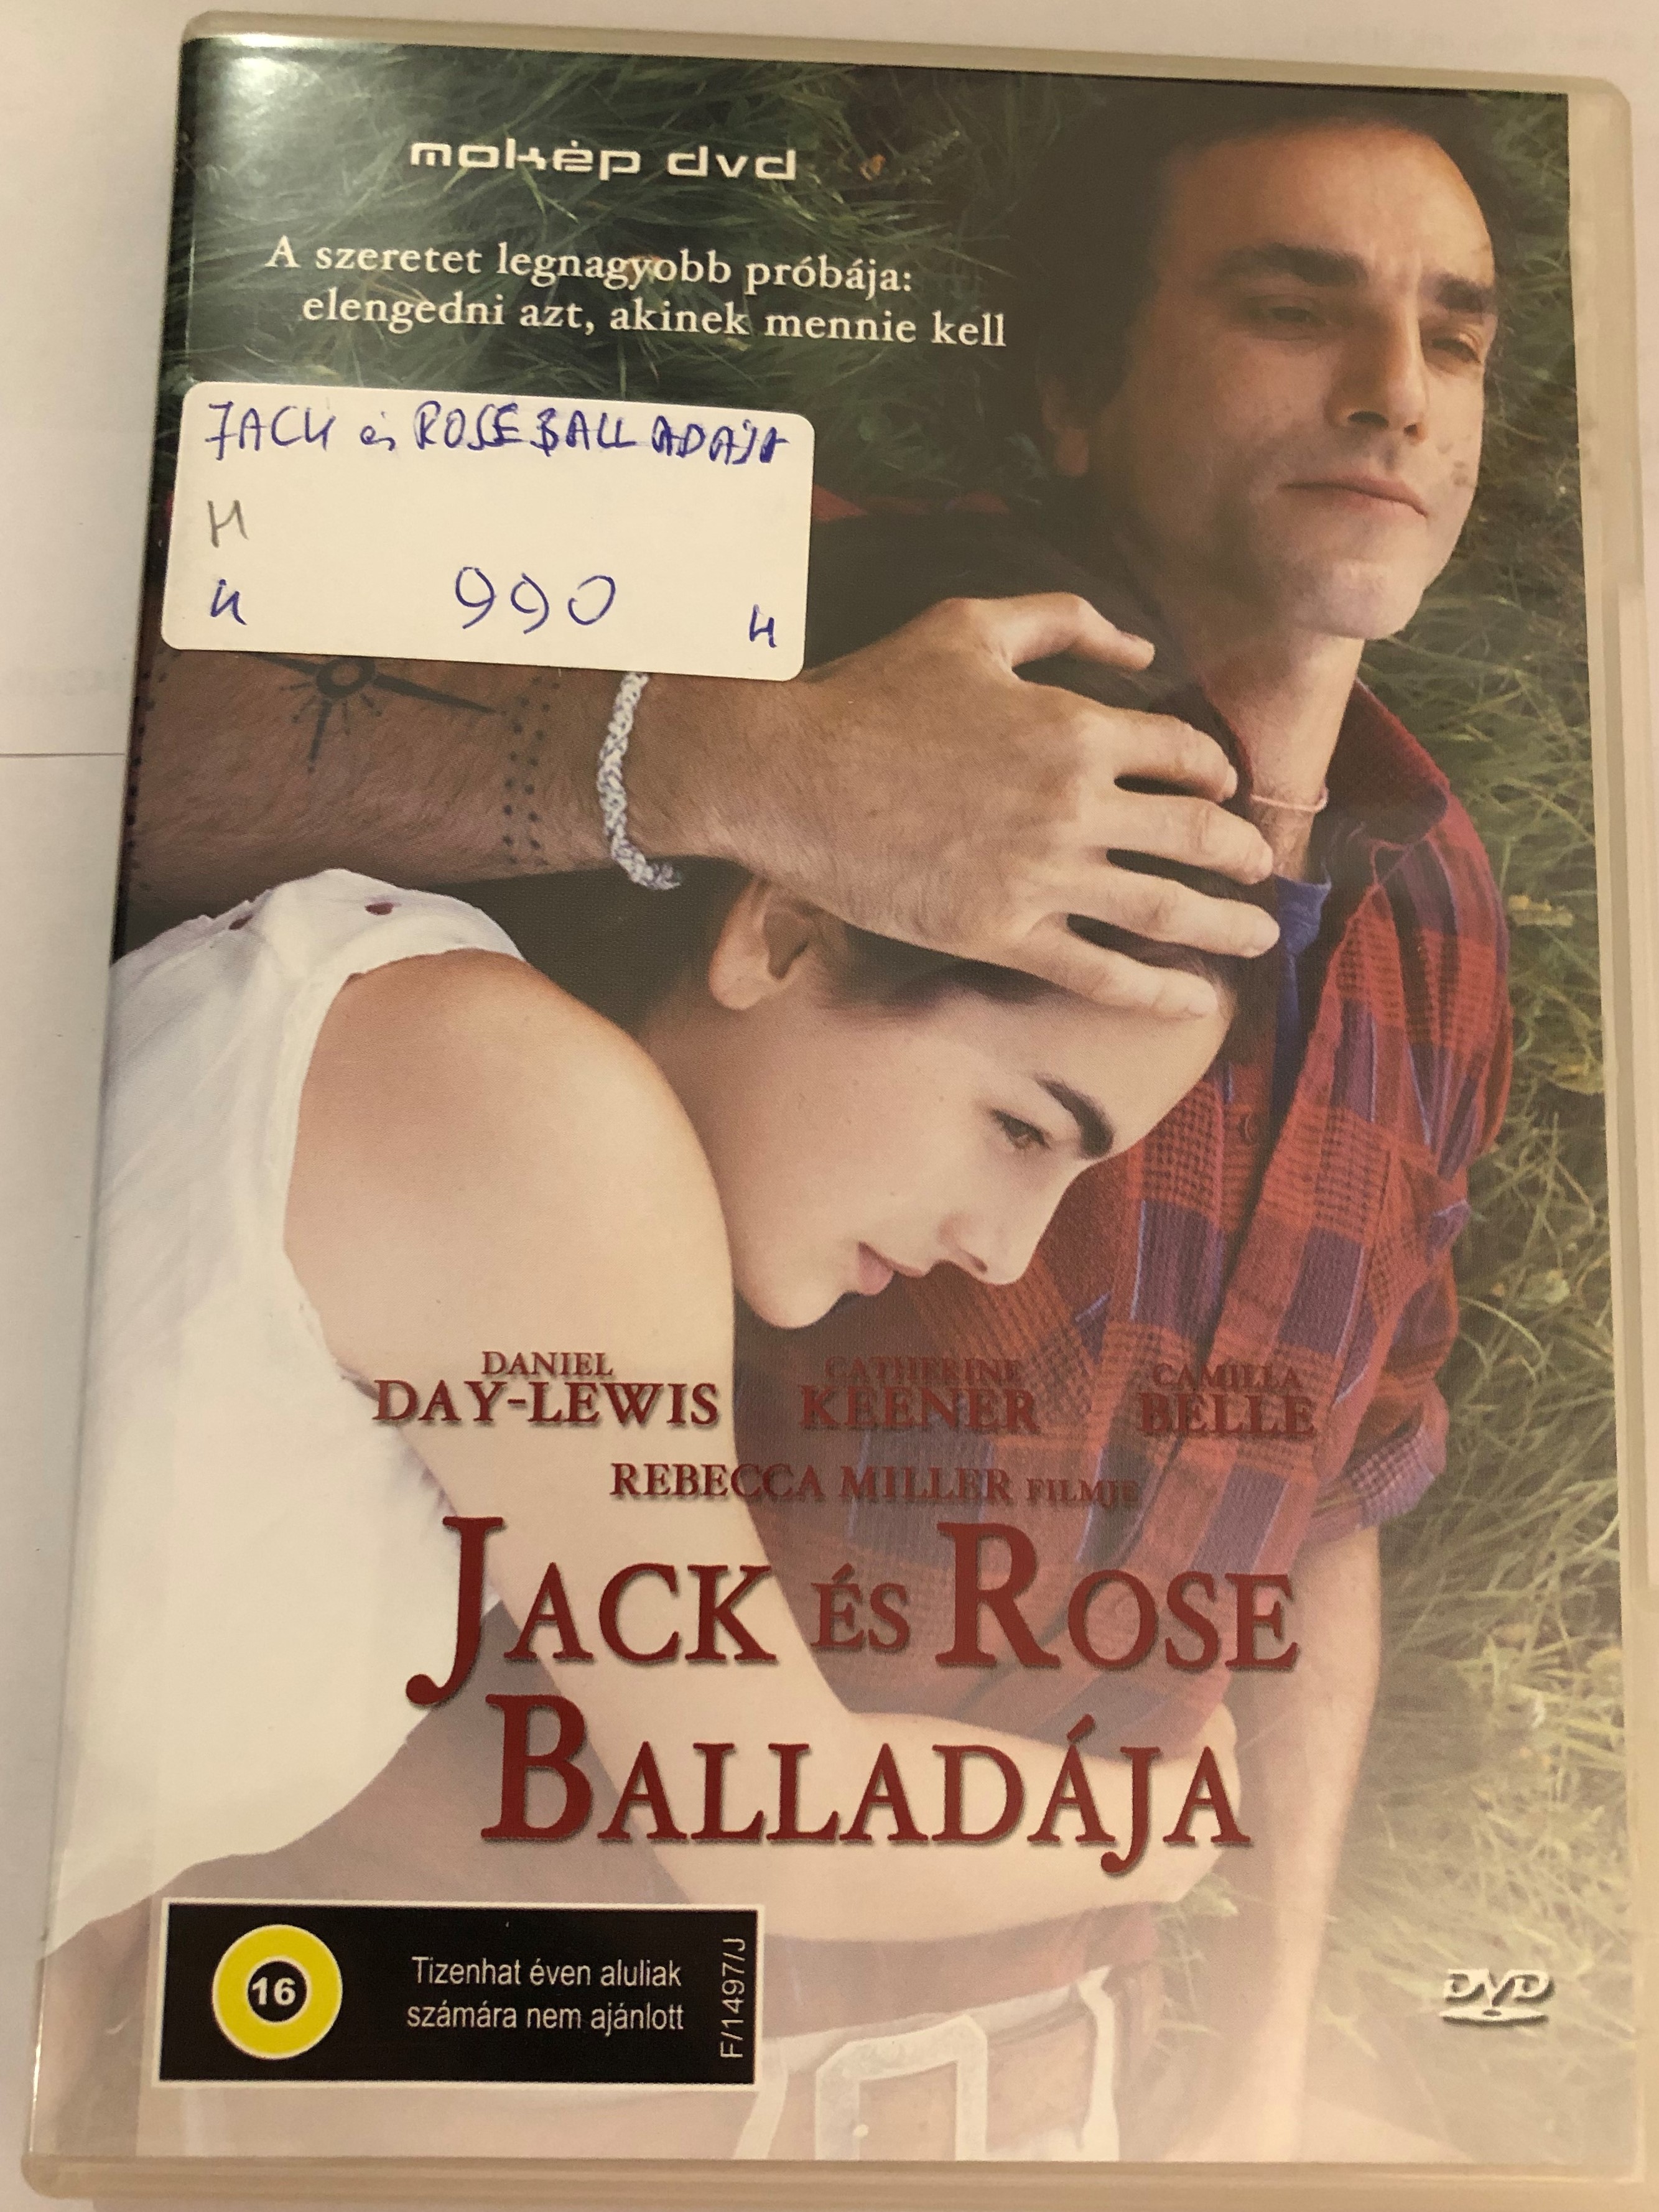 the-ballad-of-jack-and-rose-dvd-2005-jack-s-rose-ballad-ja-1.jpg